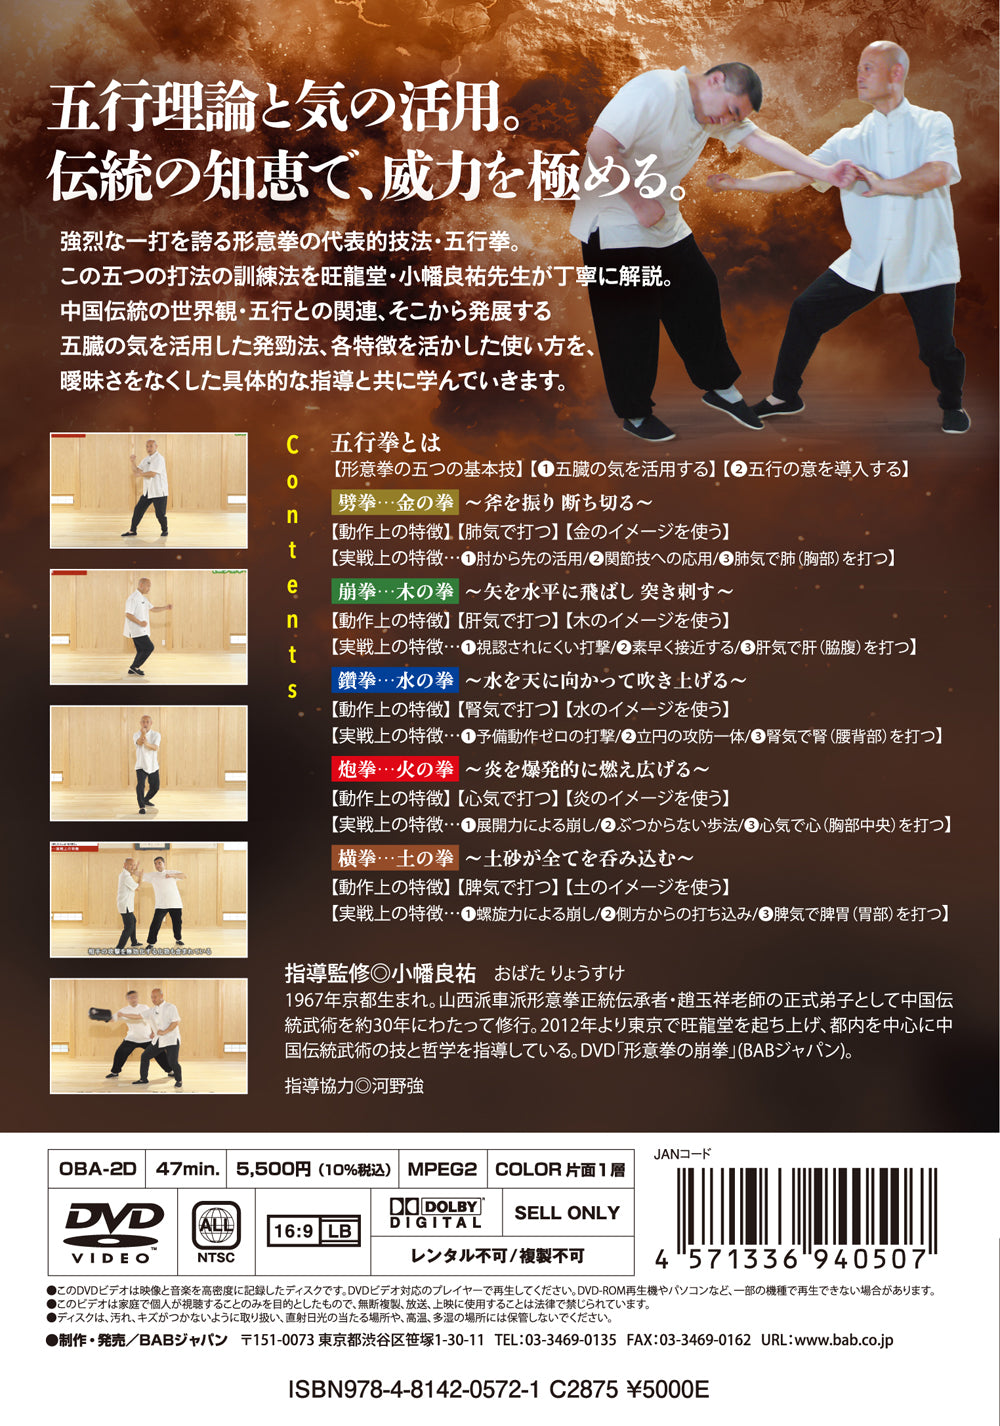 Cómo obtener el poder de los golpes en el DVD Xing Yi Quan de Ryosuke Obata